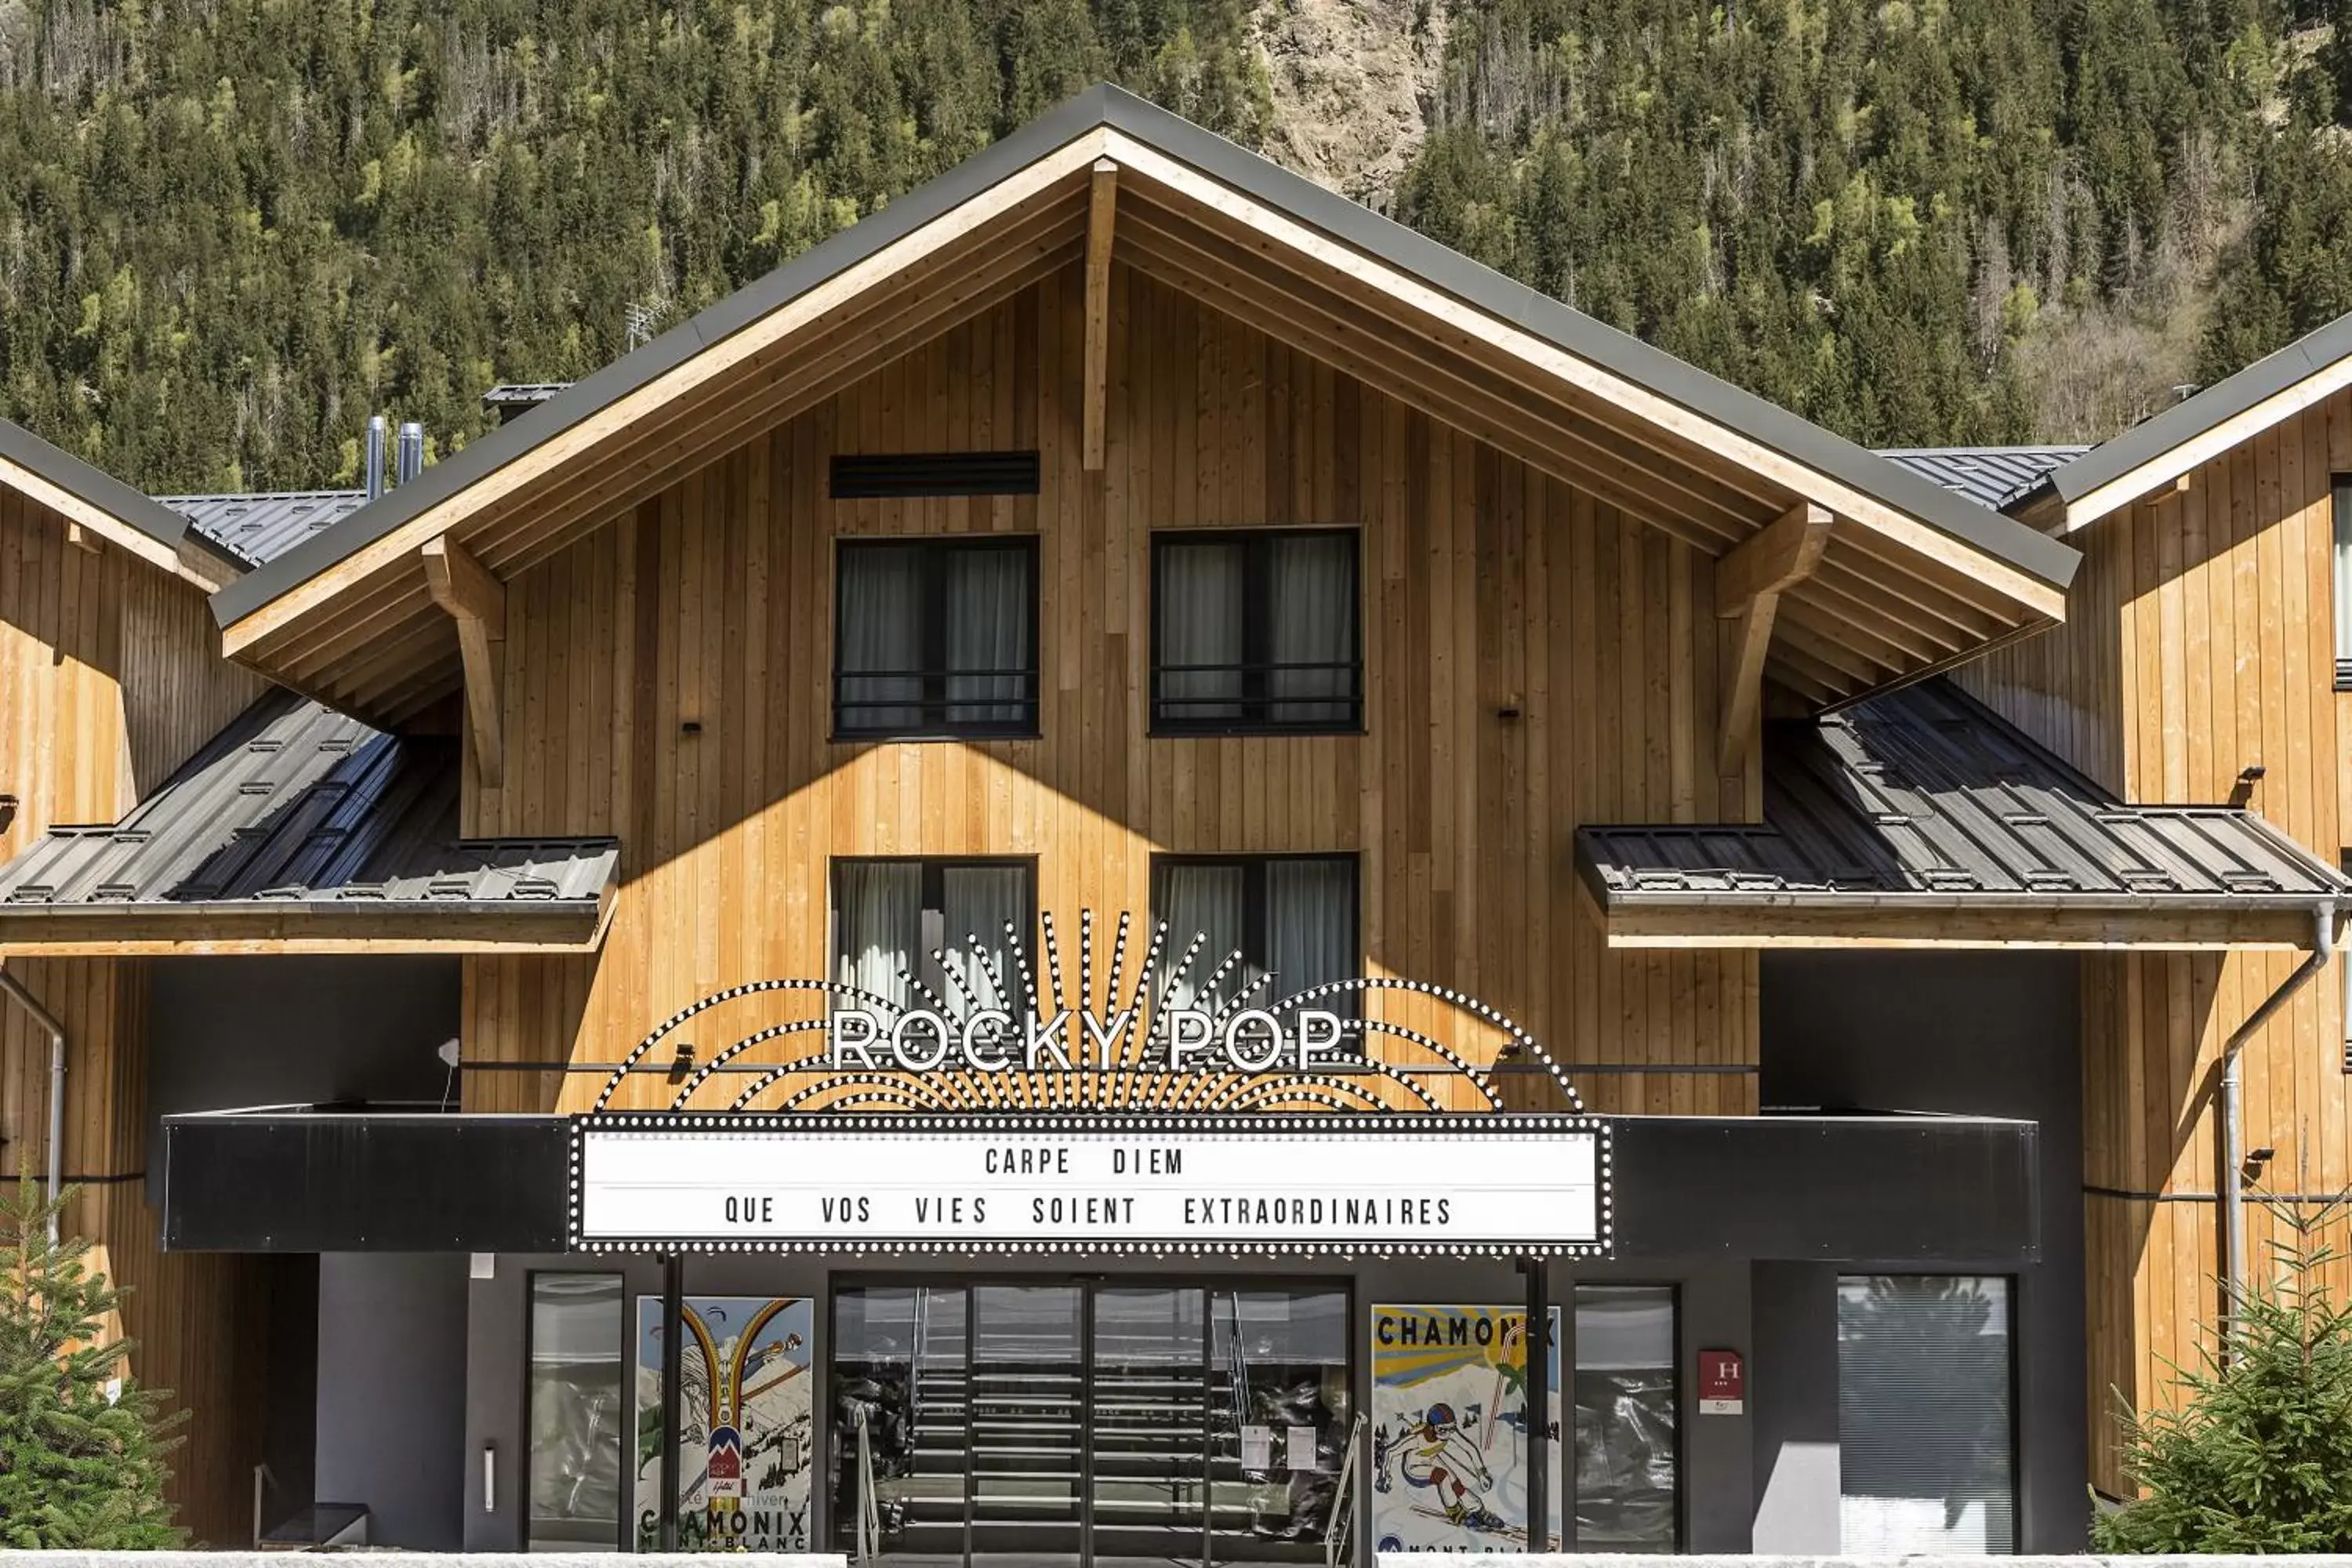 Facade/entrance in RockyPop Chamonix - Les Houches